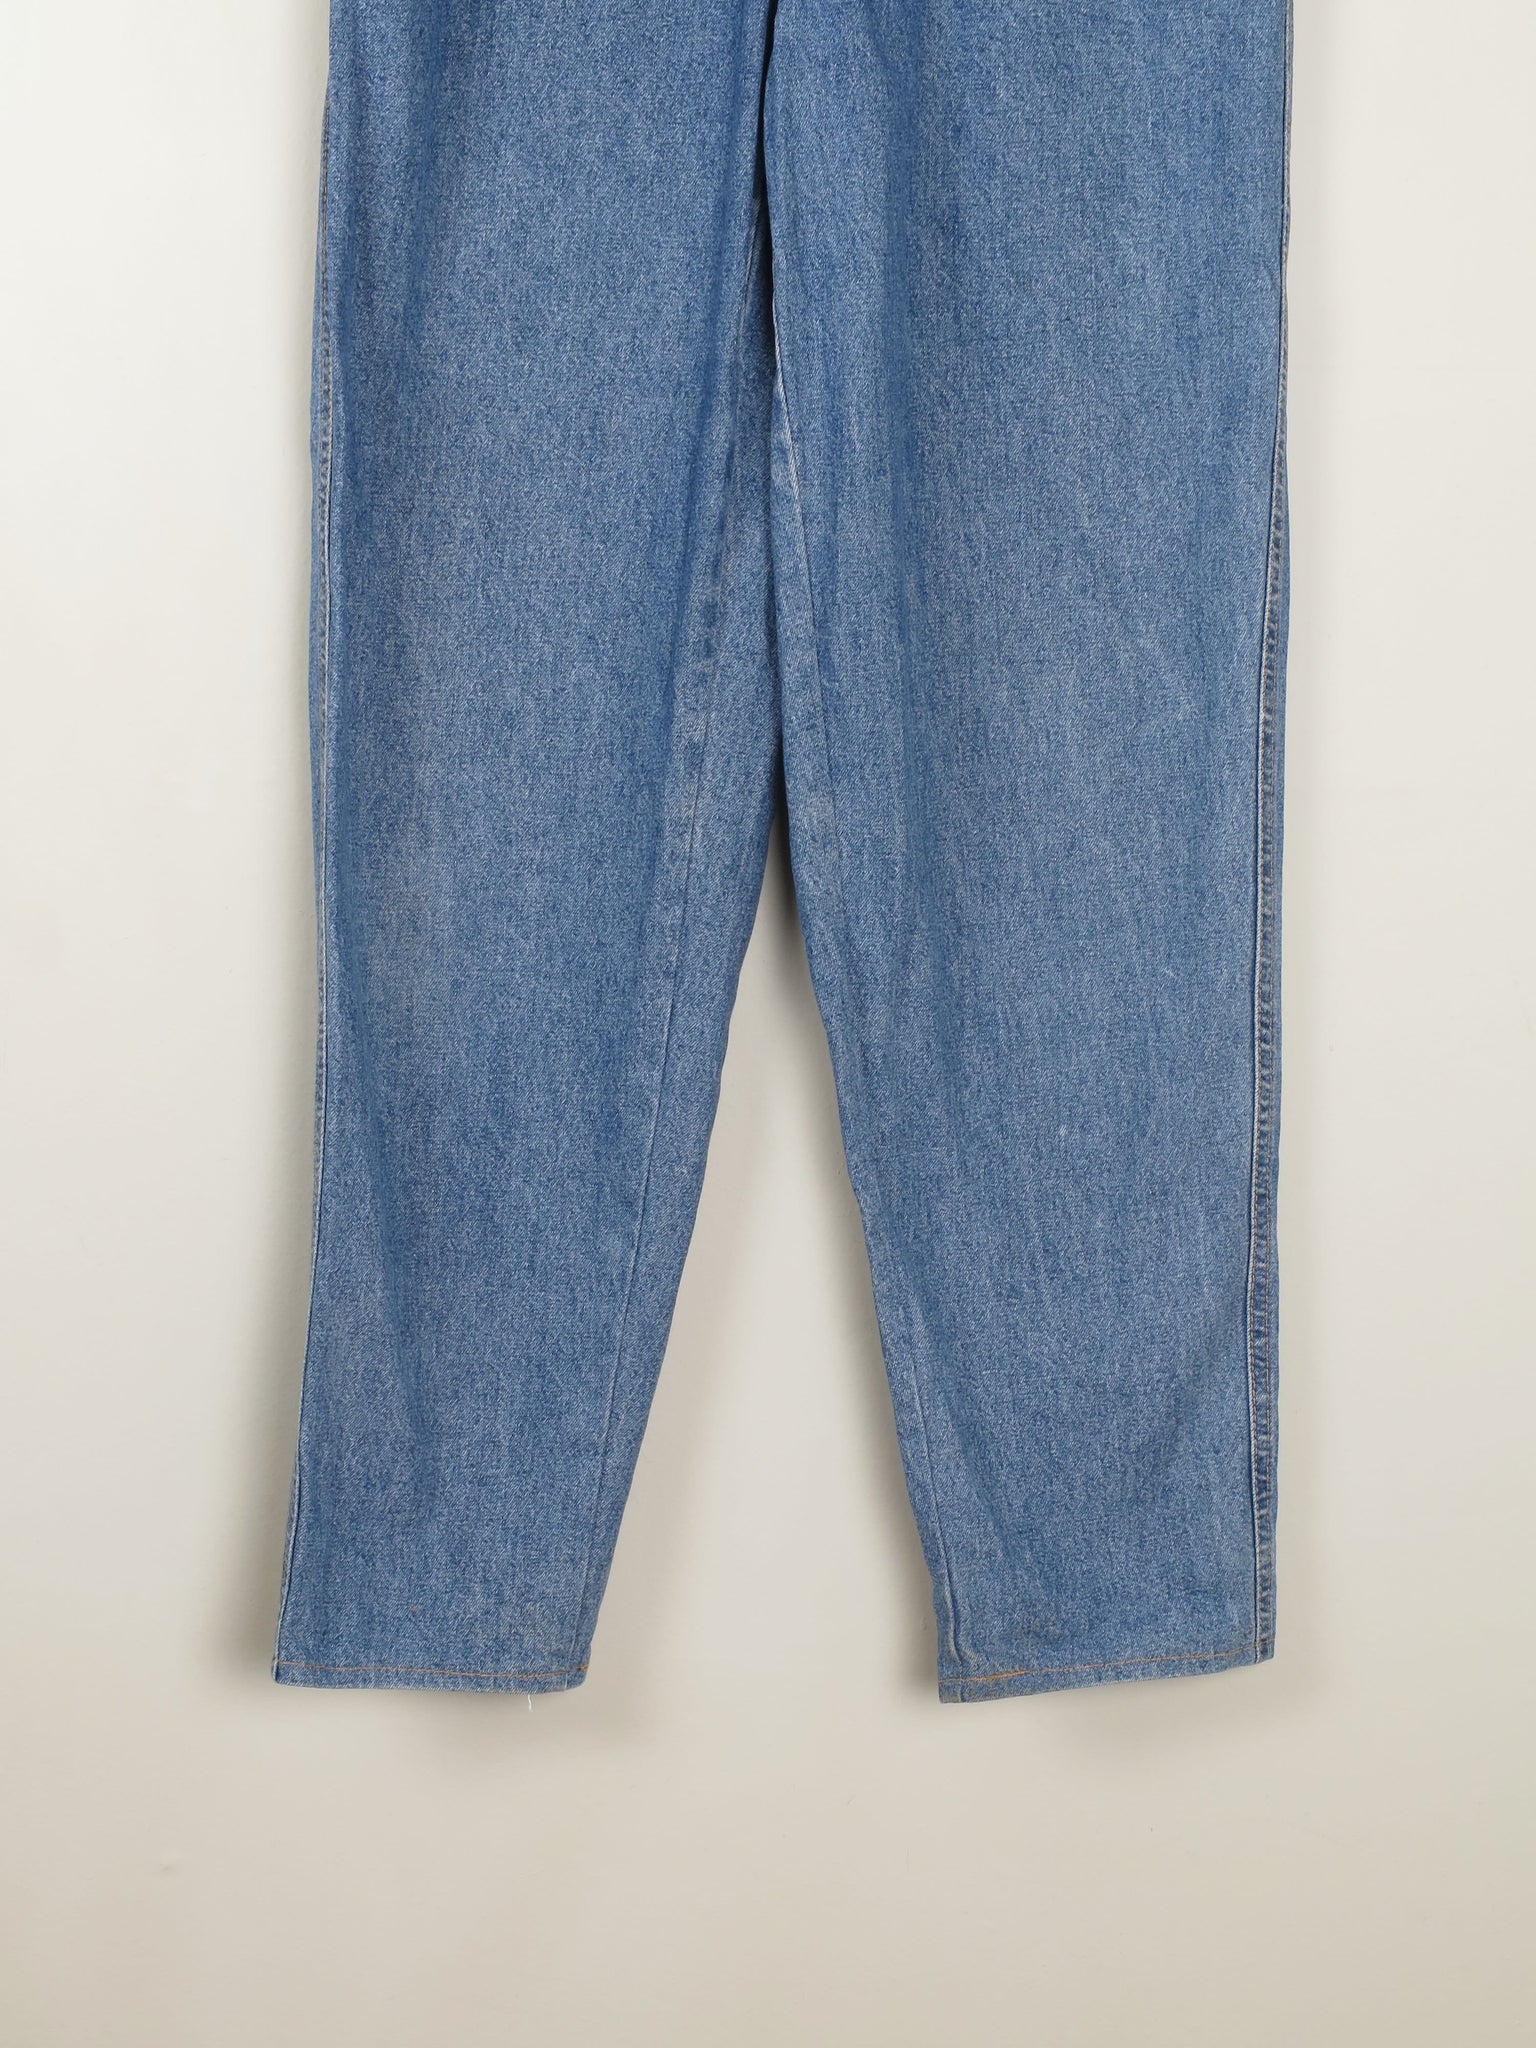 Women's Vintage High Waist Jeans S